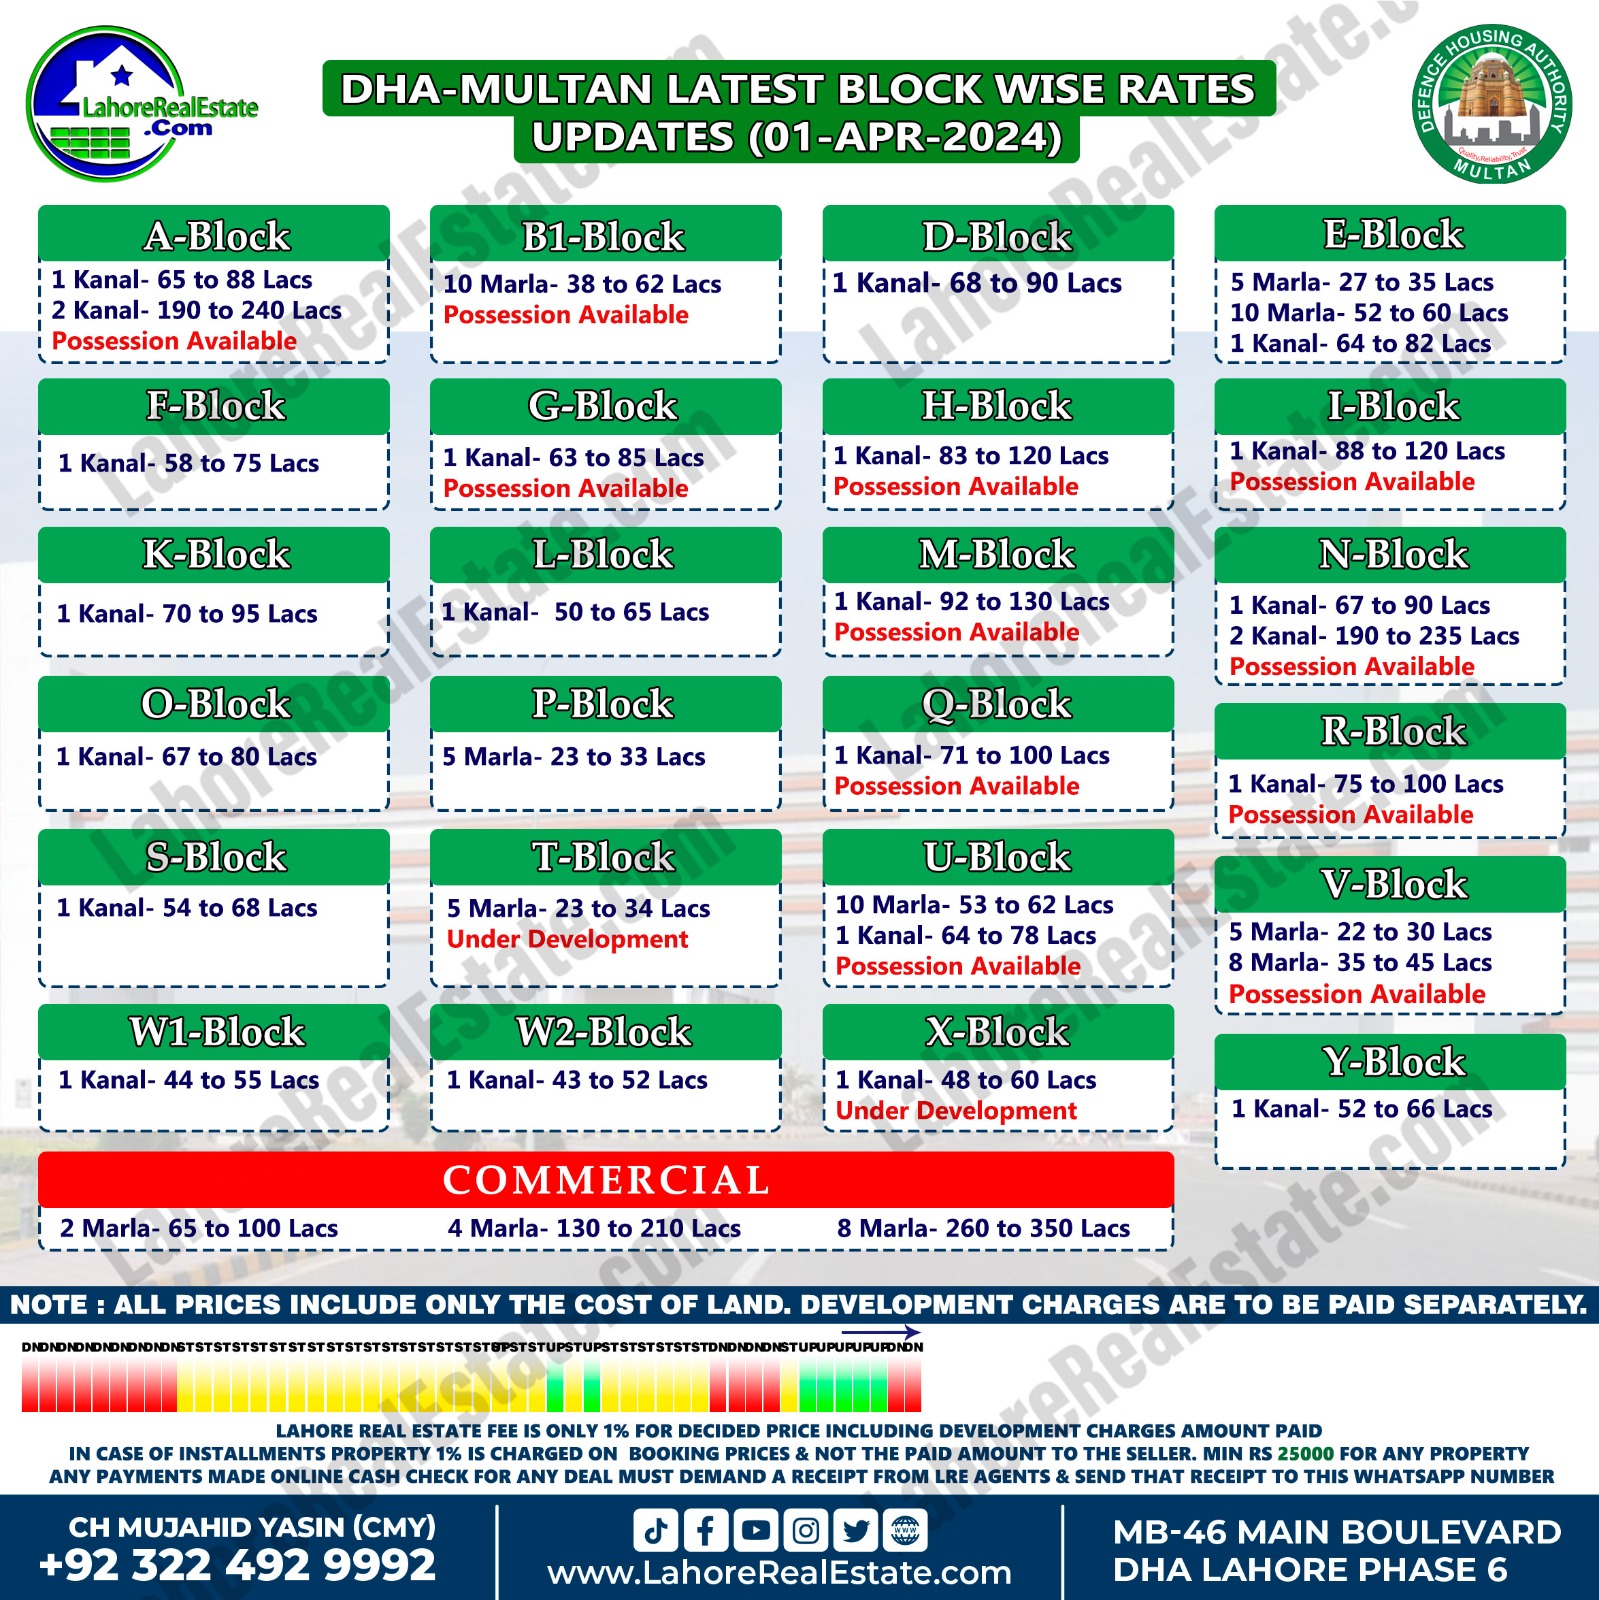 DHA Multan Plot Prices Update April 02, 2024